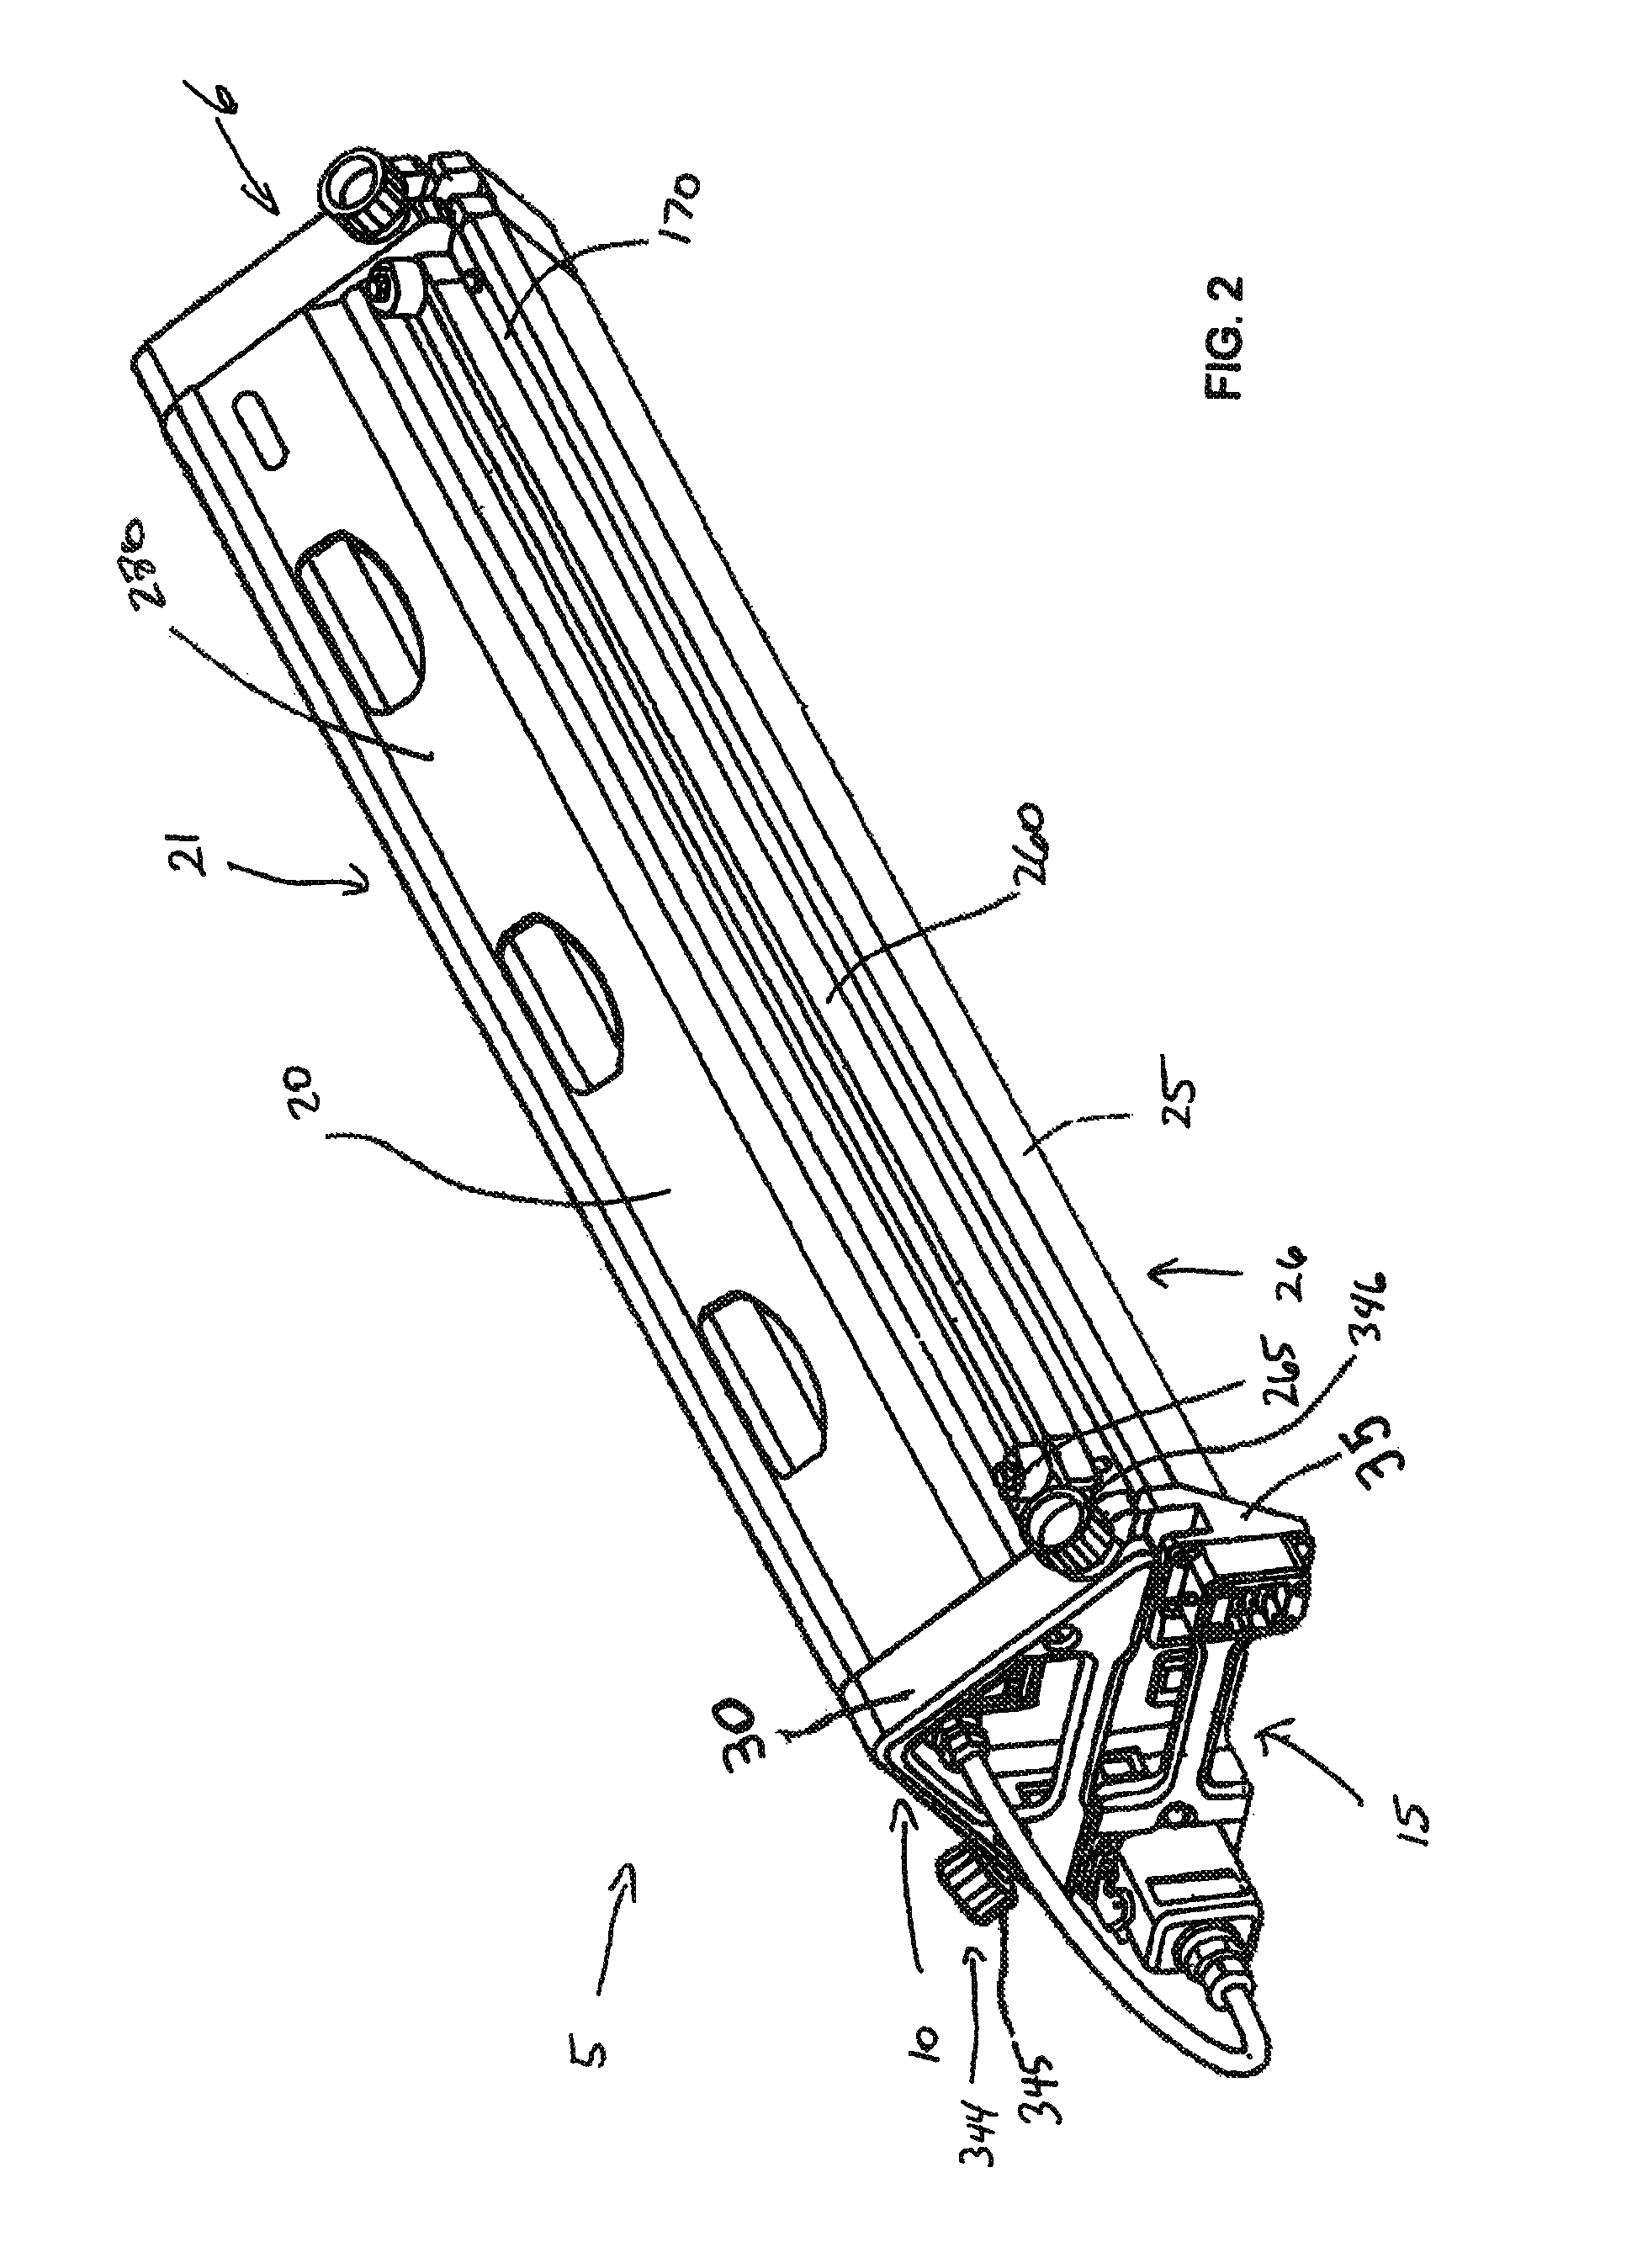 Belt splicing apparatus for conveyor belts